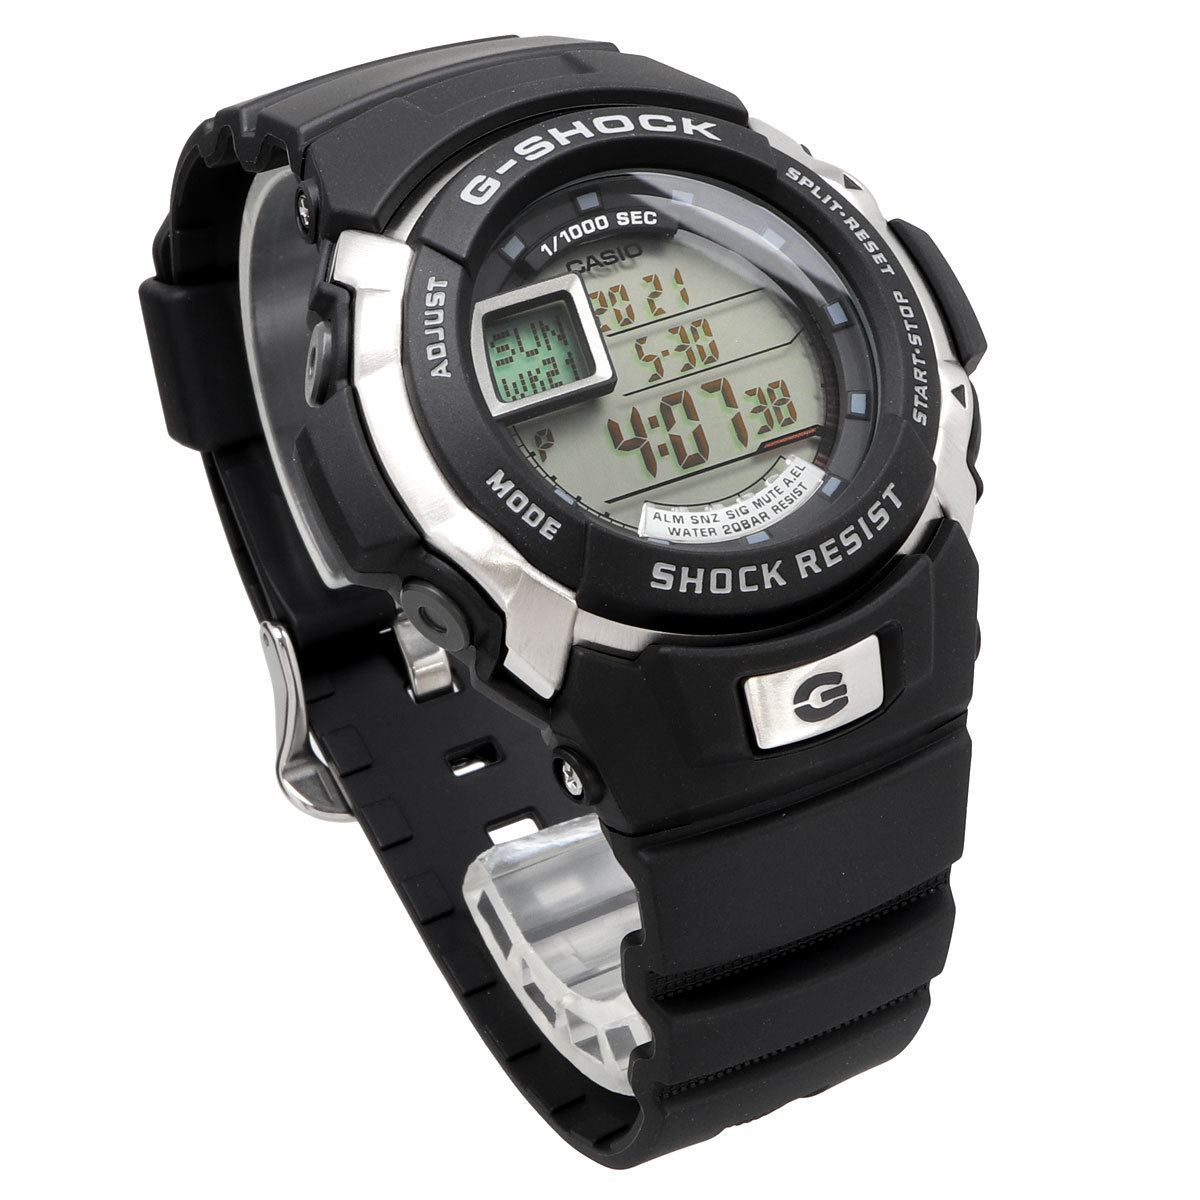  translation have special price![CASIO G-SHOCK]G-7700-1 rare new goods unused G-SPIKE digital men's black color black Casio G shock stopwatch wristwatch 